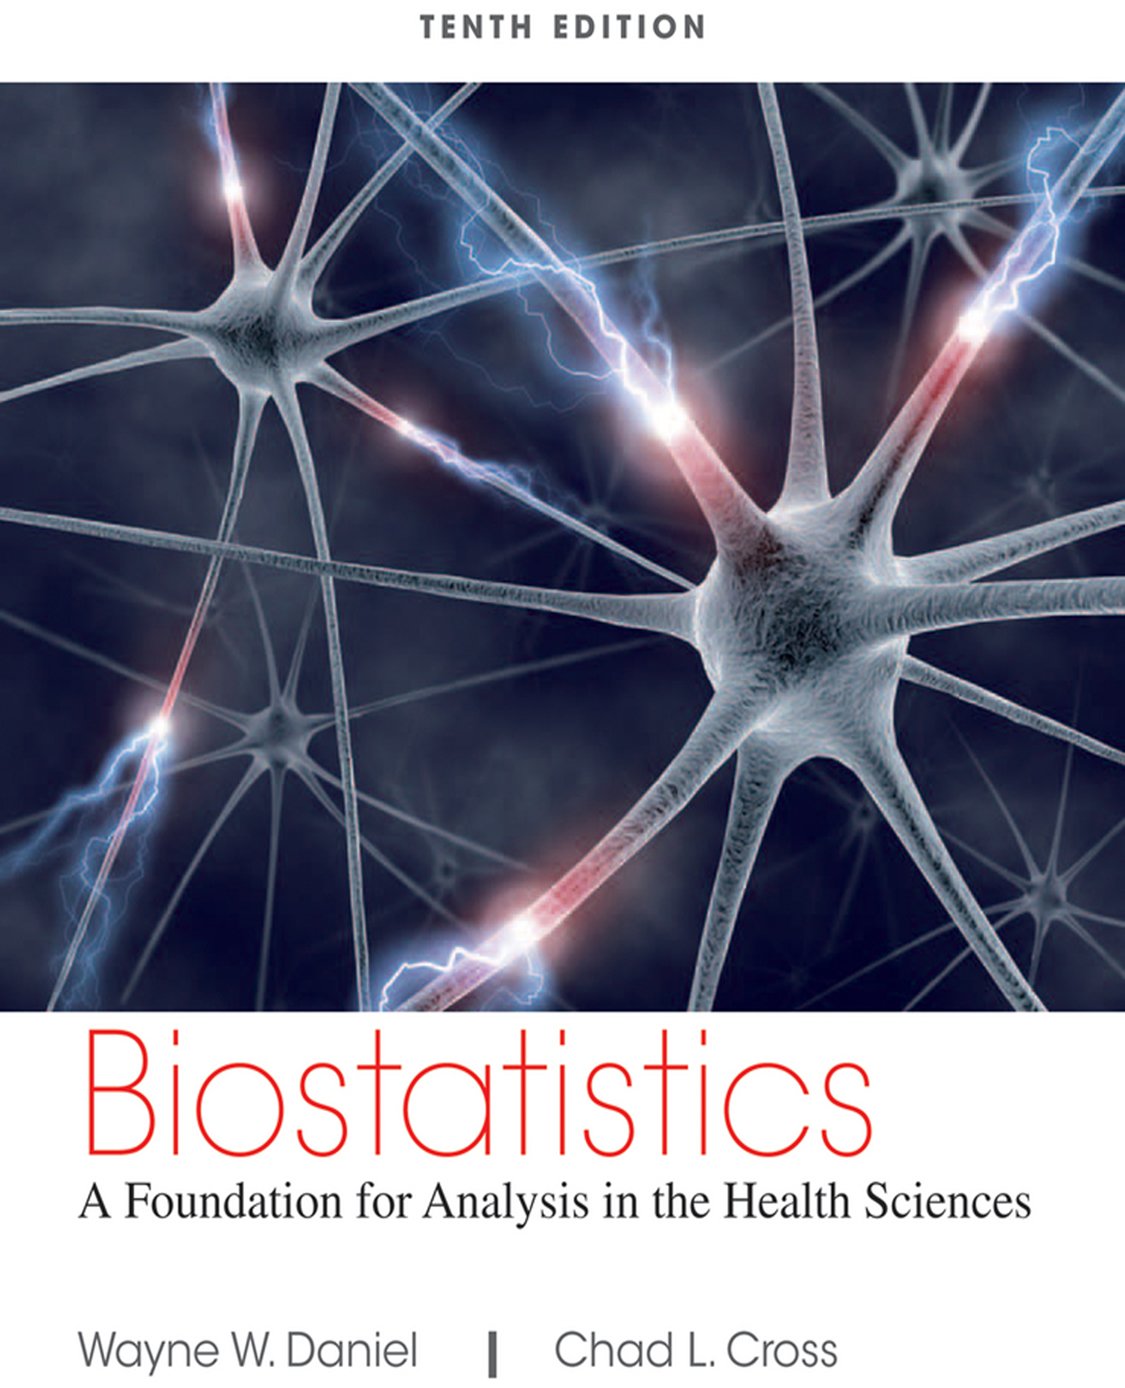 Biostatistics 10 Edición Wayne W. Daniel PDF